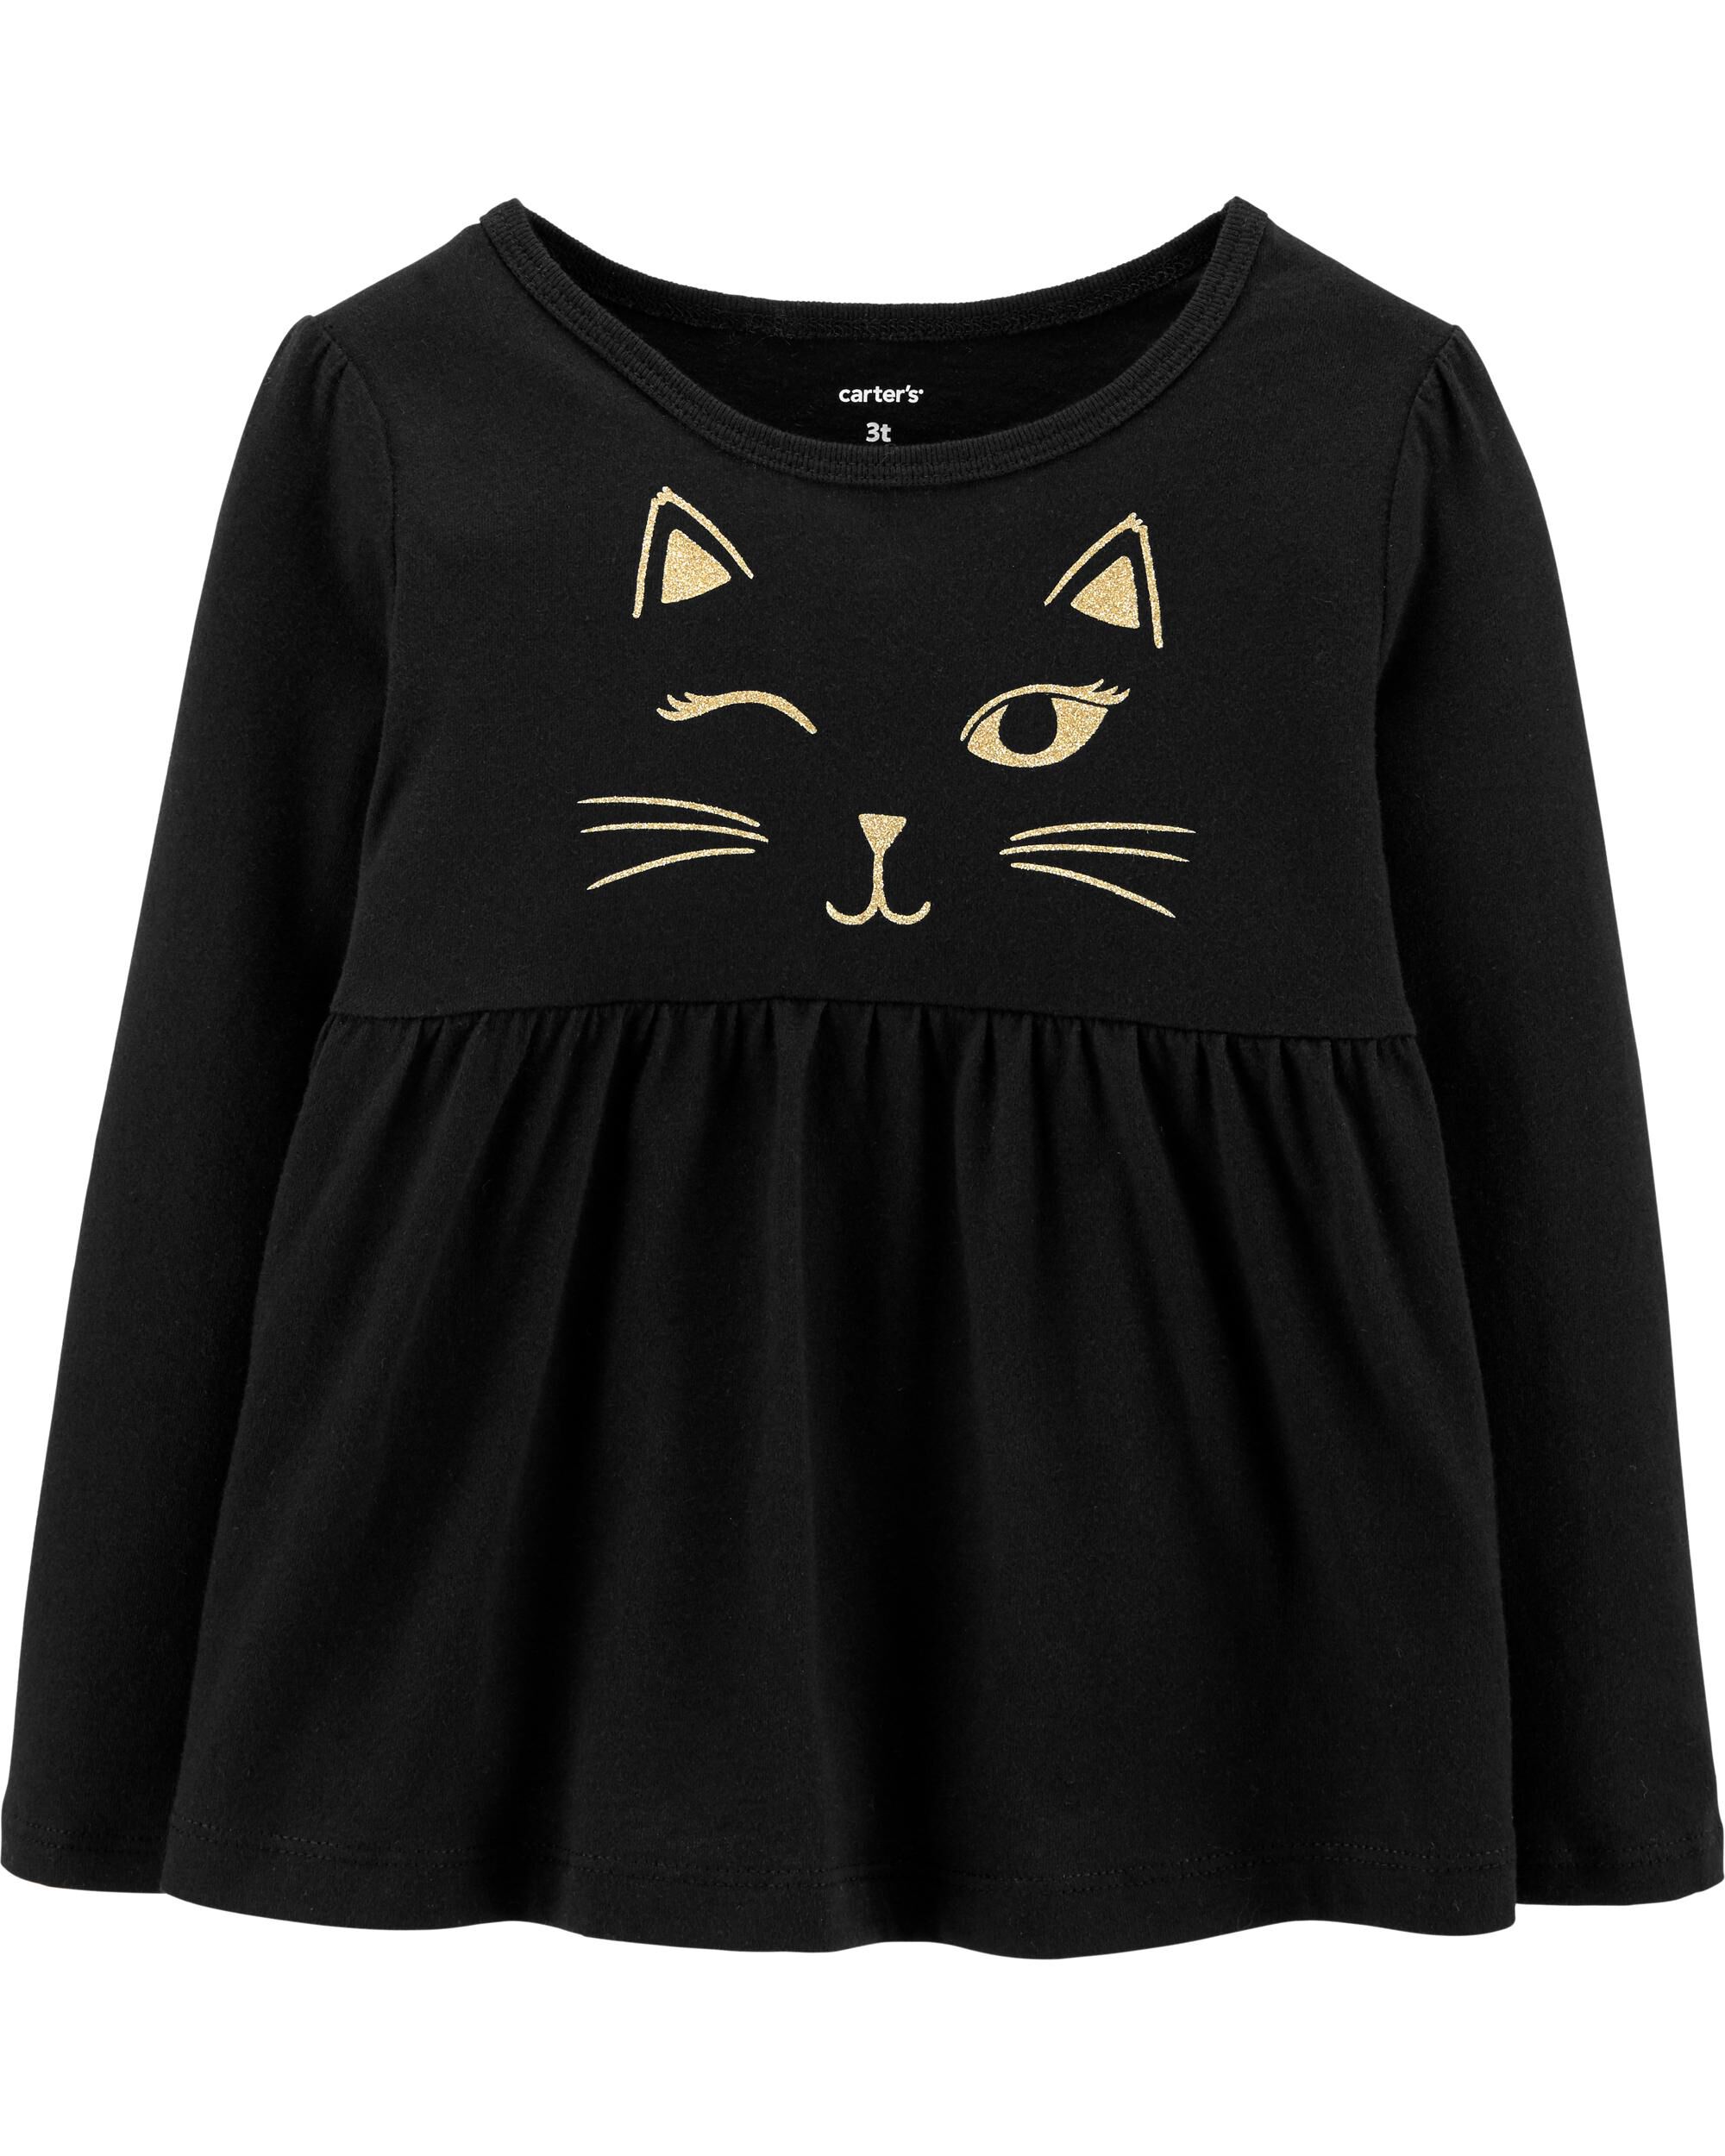 carters black cat dress